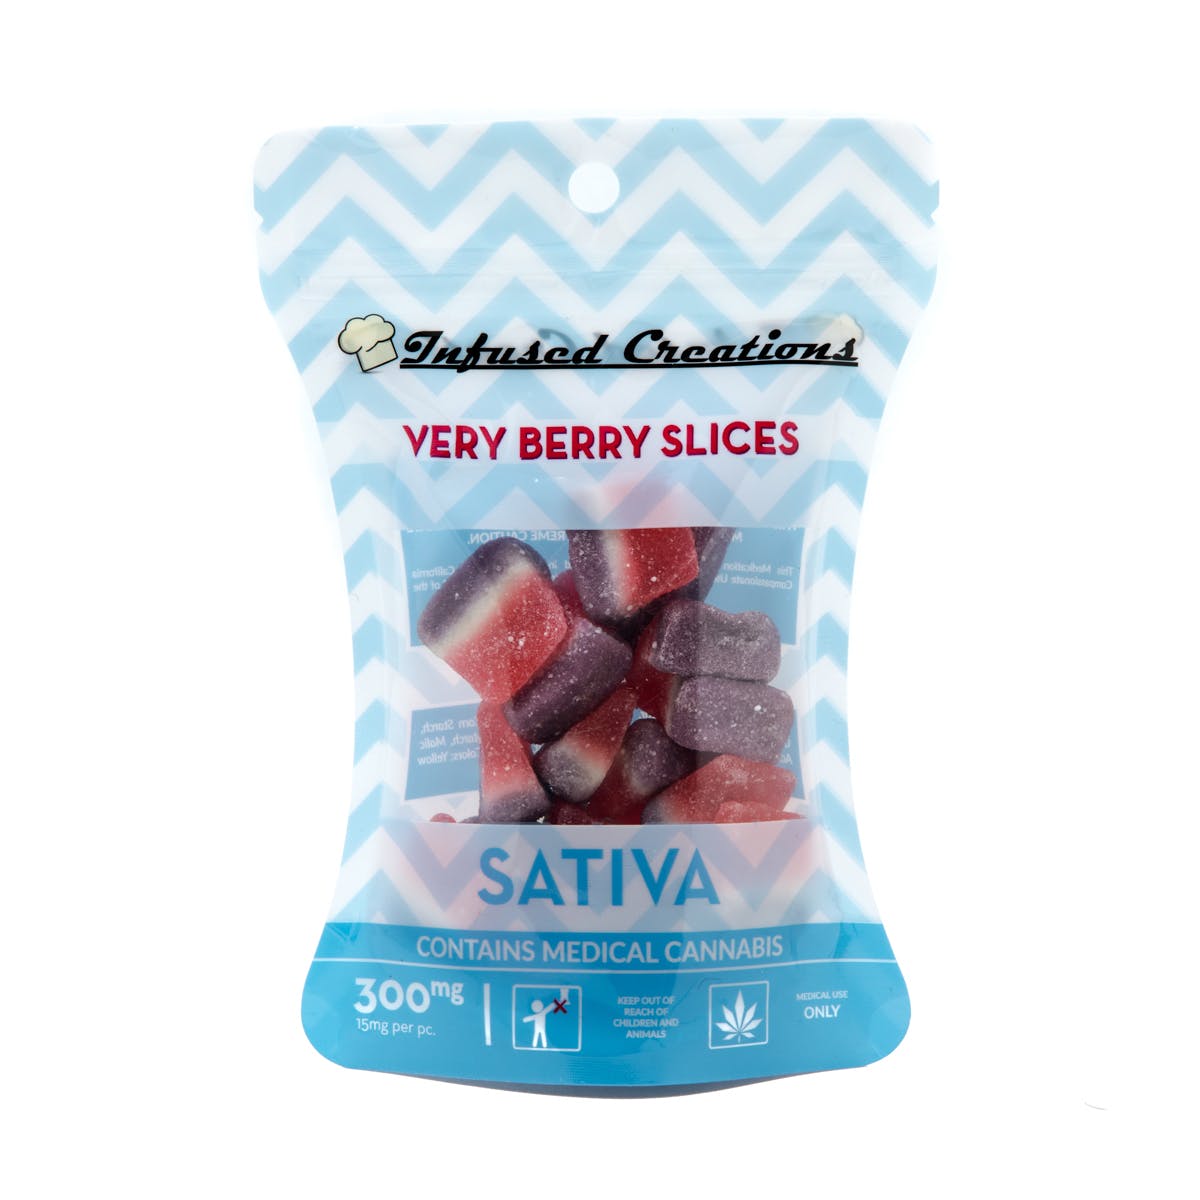 Very Berry Slices Sativa, 300mg